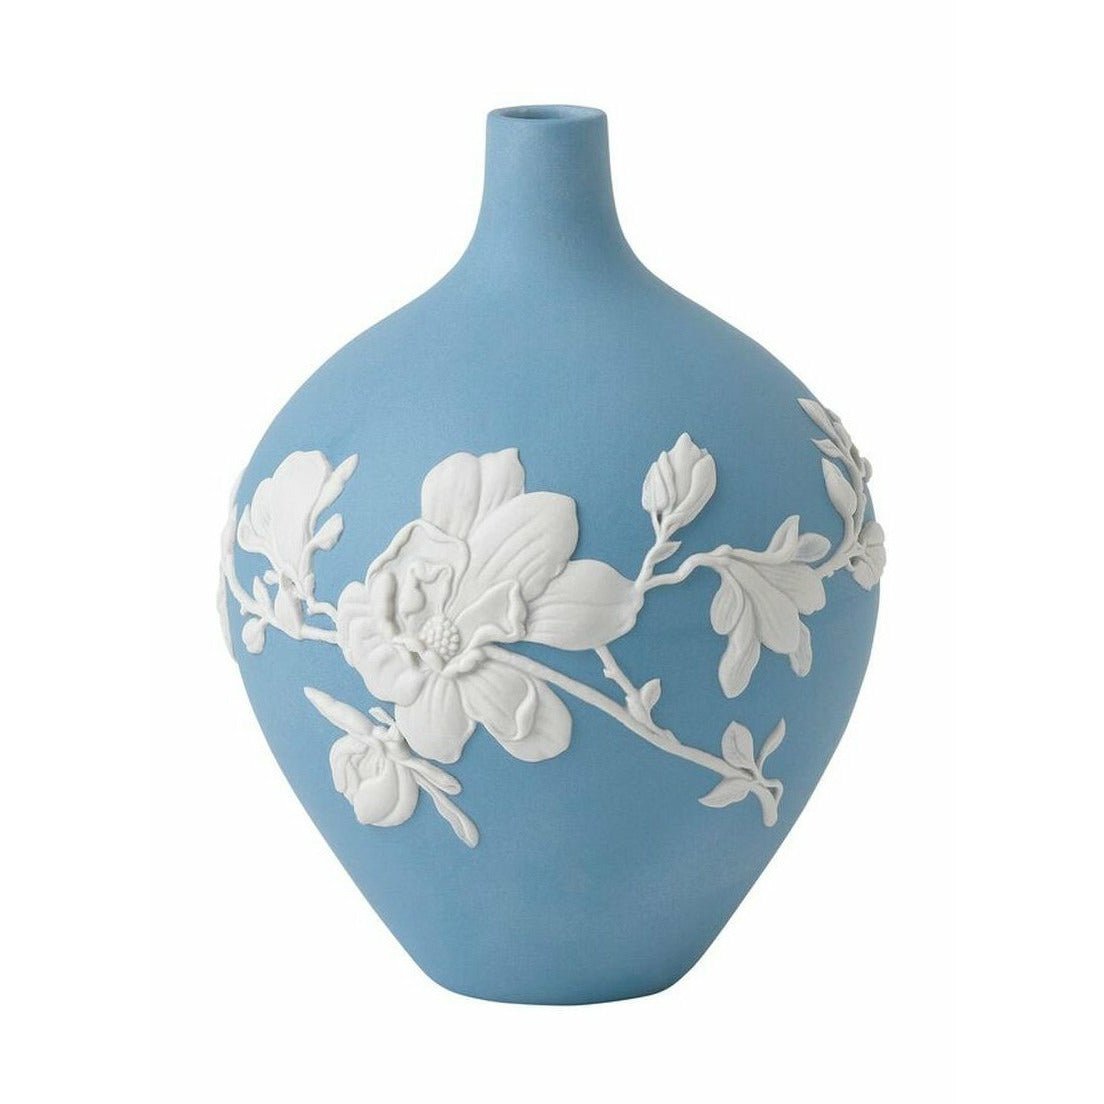 Wedgwood Magnolia Blossom Bud Vase, H 14 Cm